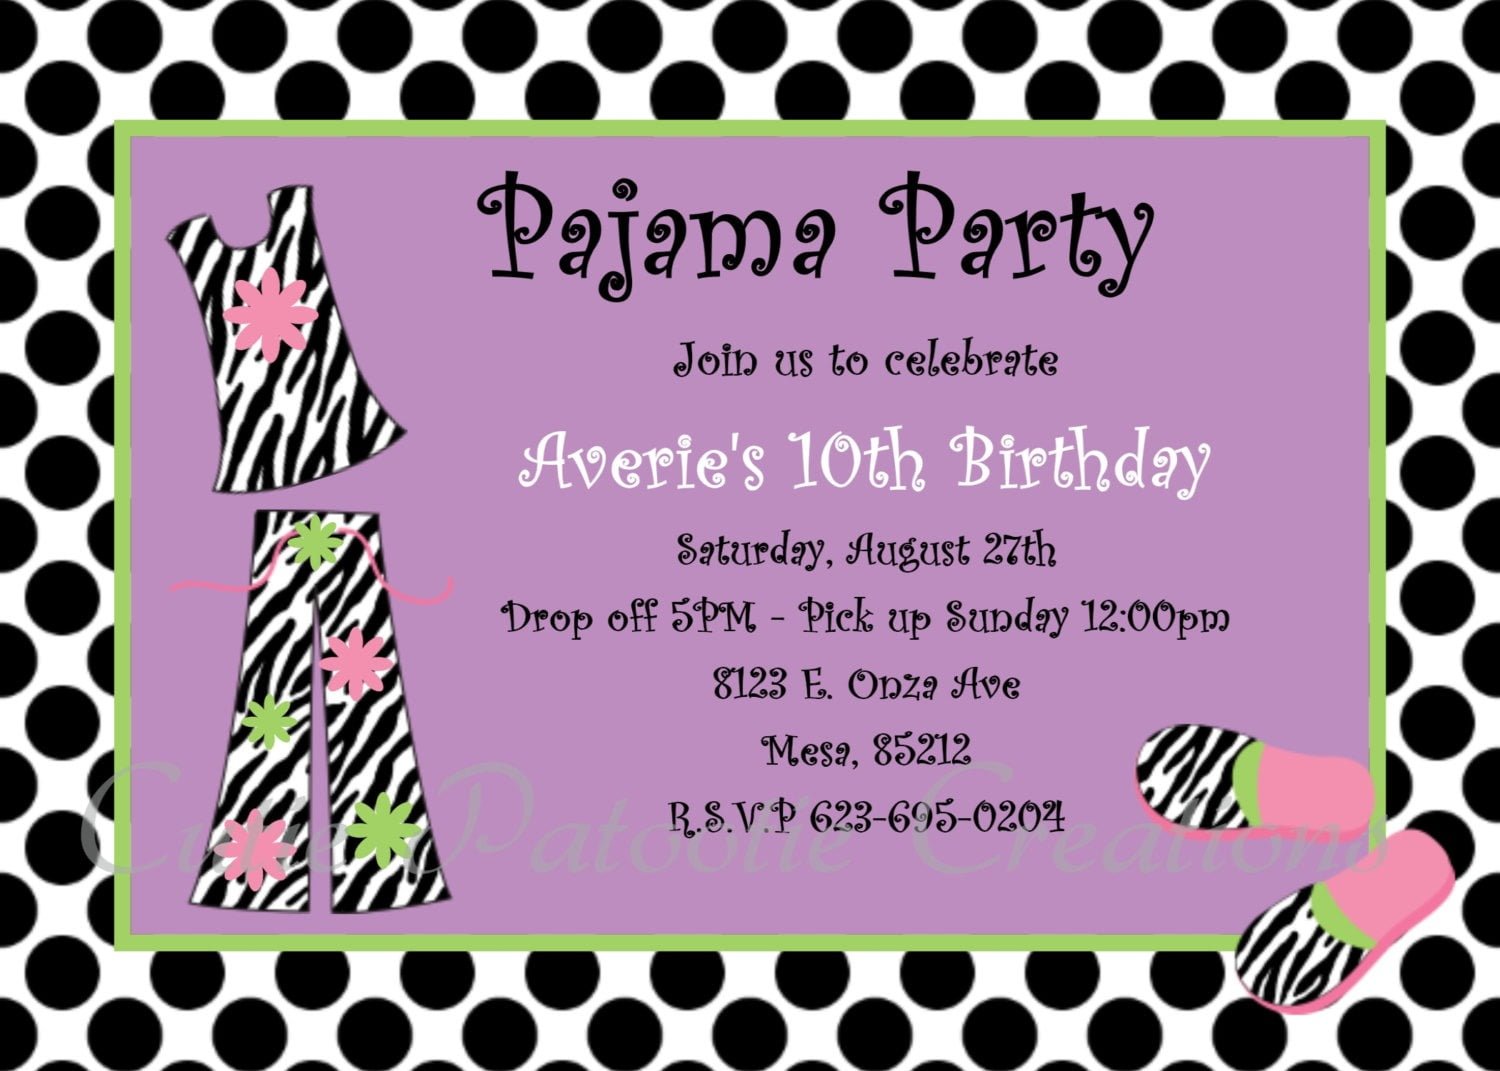 Pajama Party Invitations Pajama Party Invitations For Party.